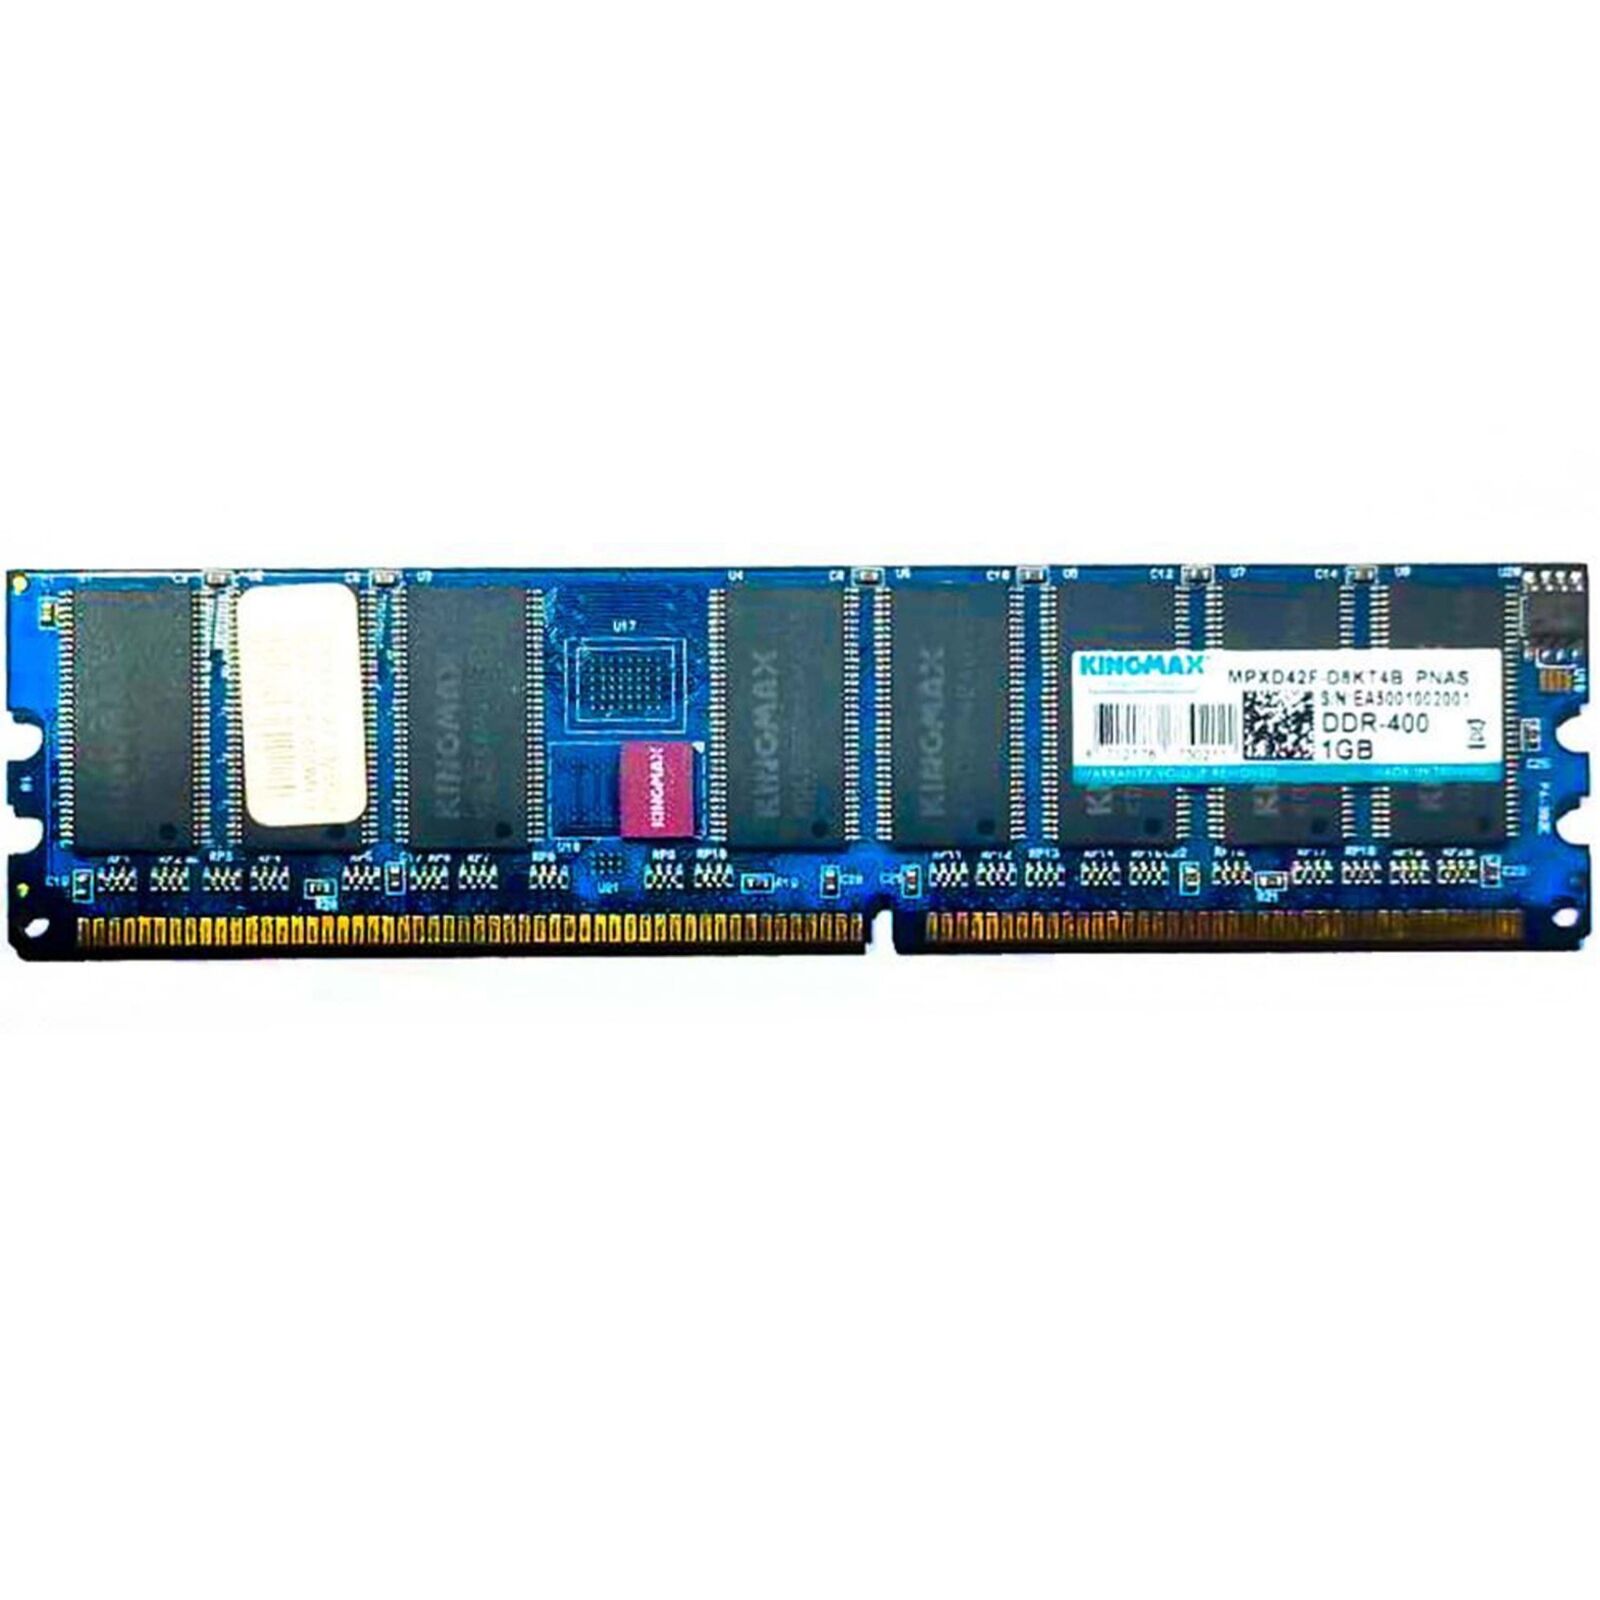 KingMAX DDR1 1GB 400MHZ PC3200 RAM Memory Module Dimm Desktop Computer Desktop